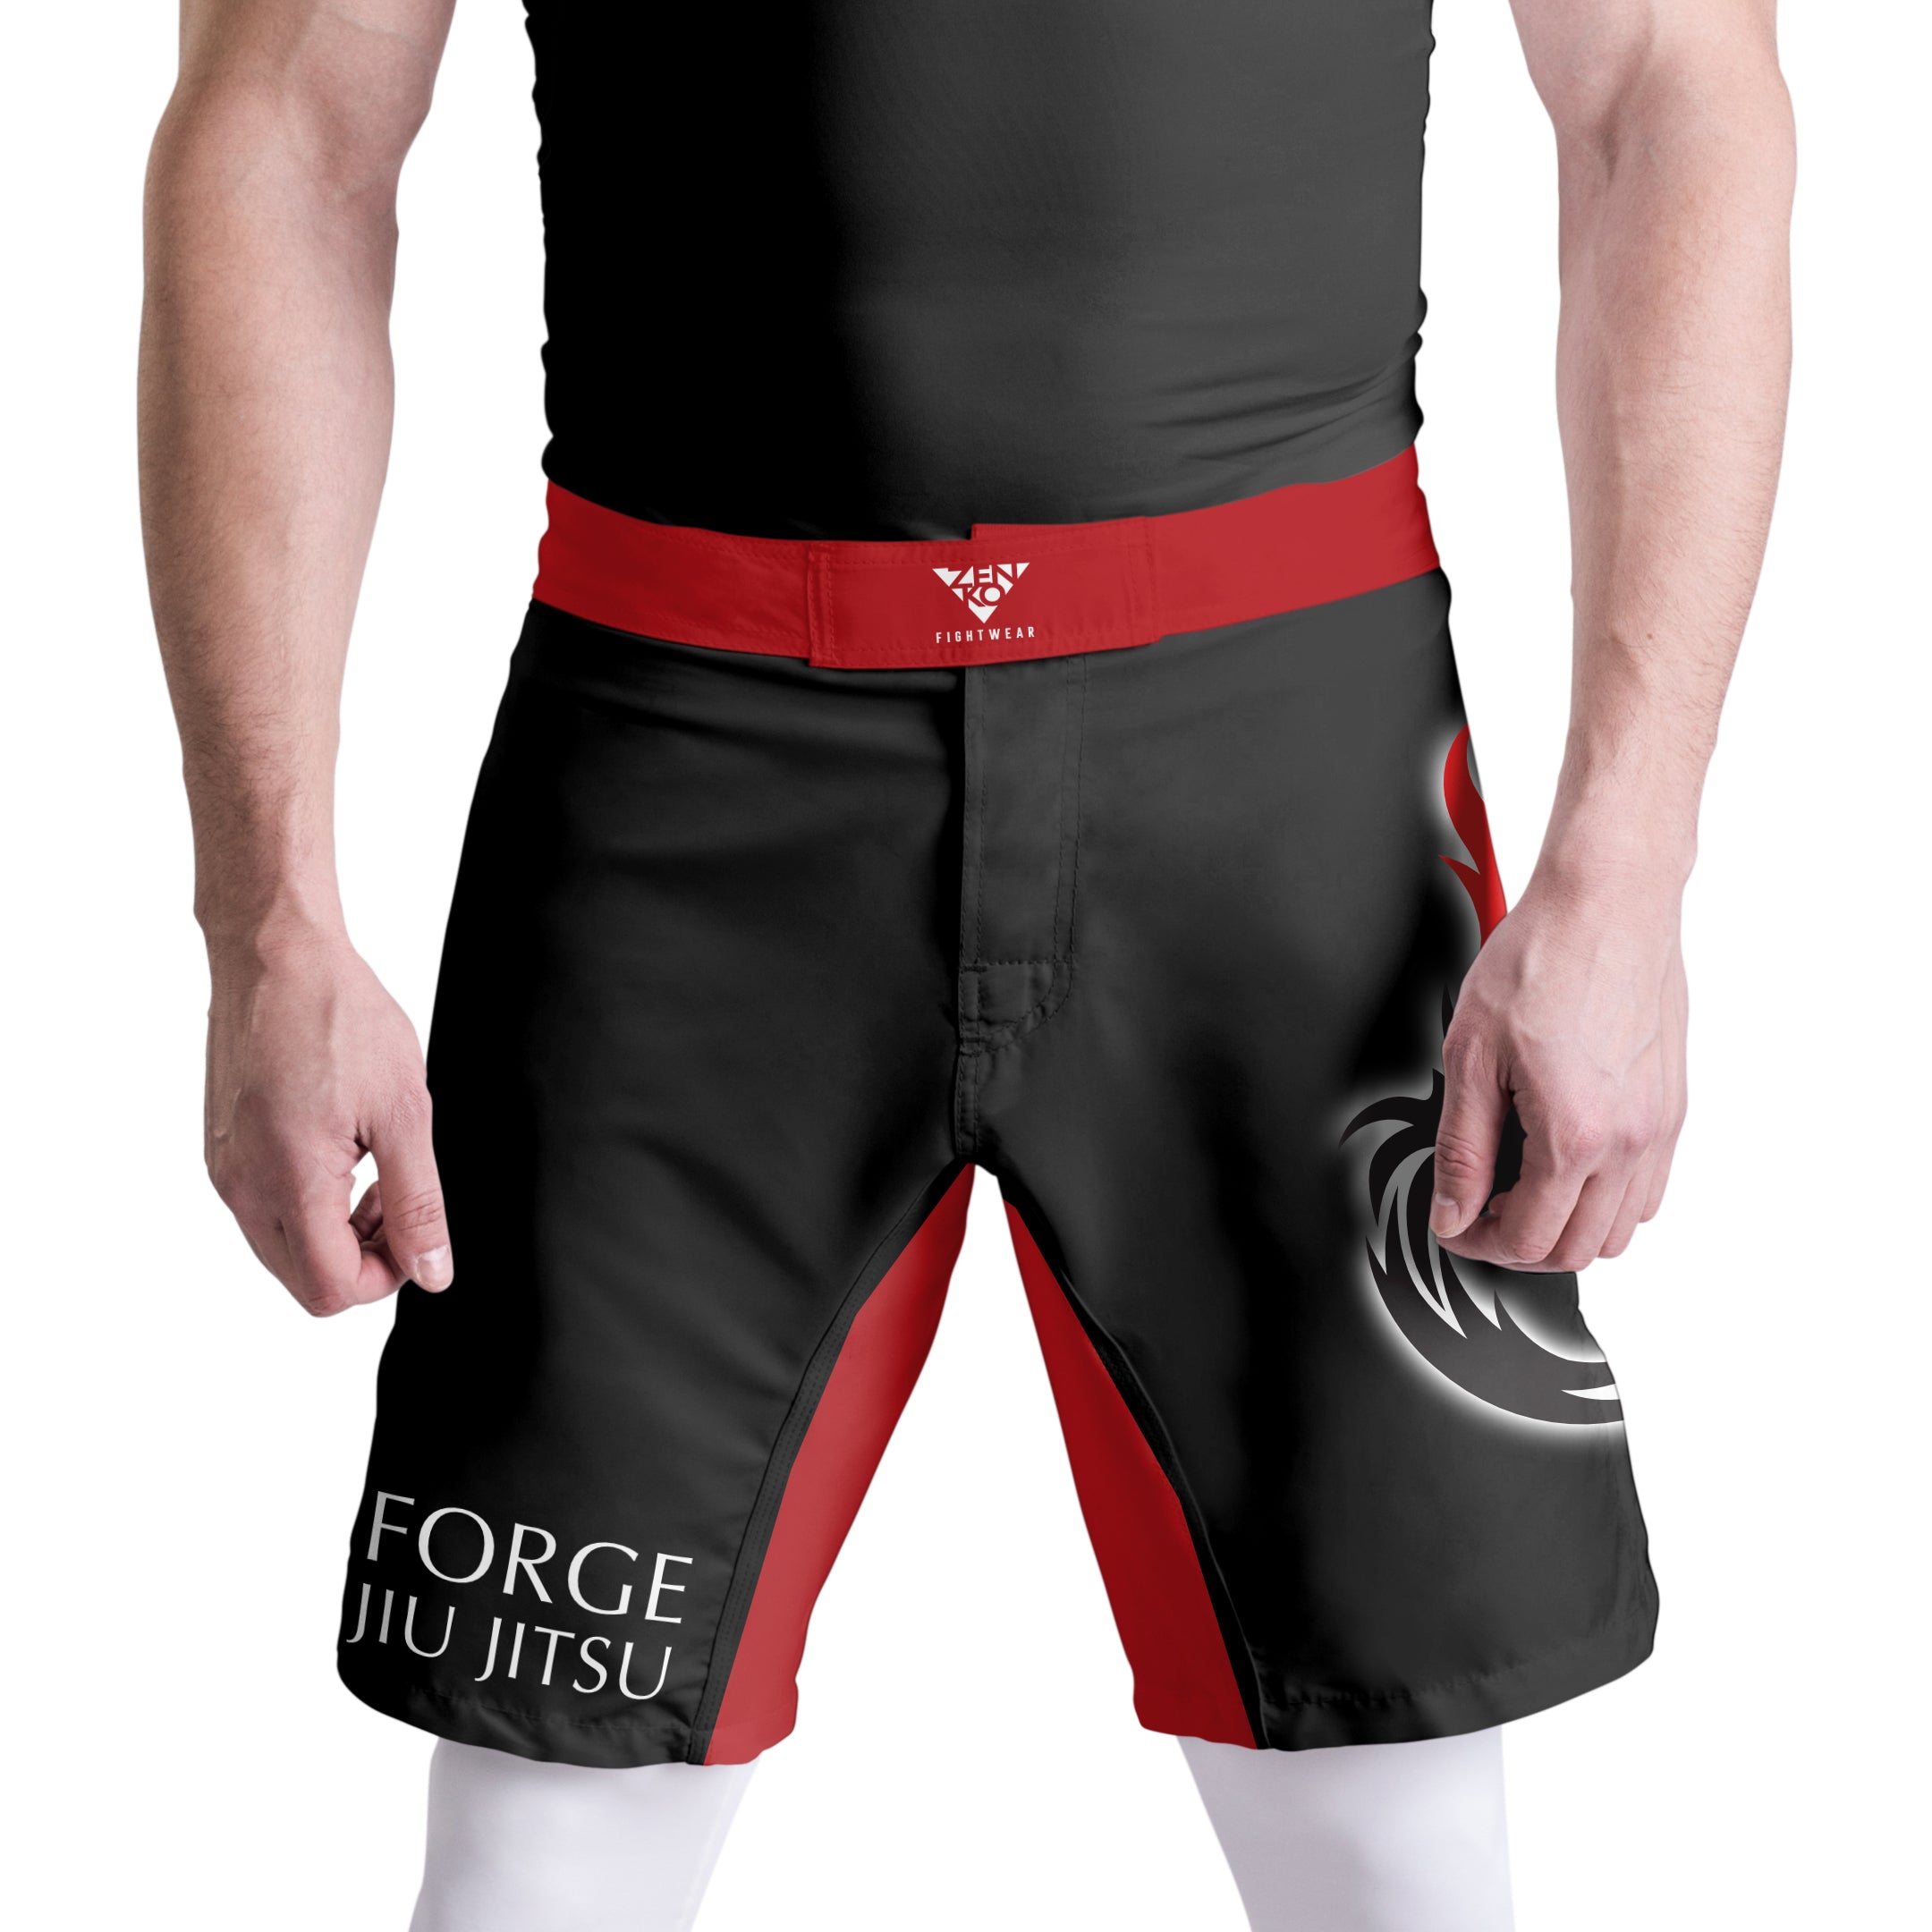 Forge Jiu Jitsu Fight Shorts - Zenko Fightwear